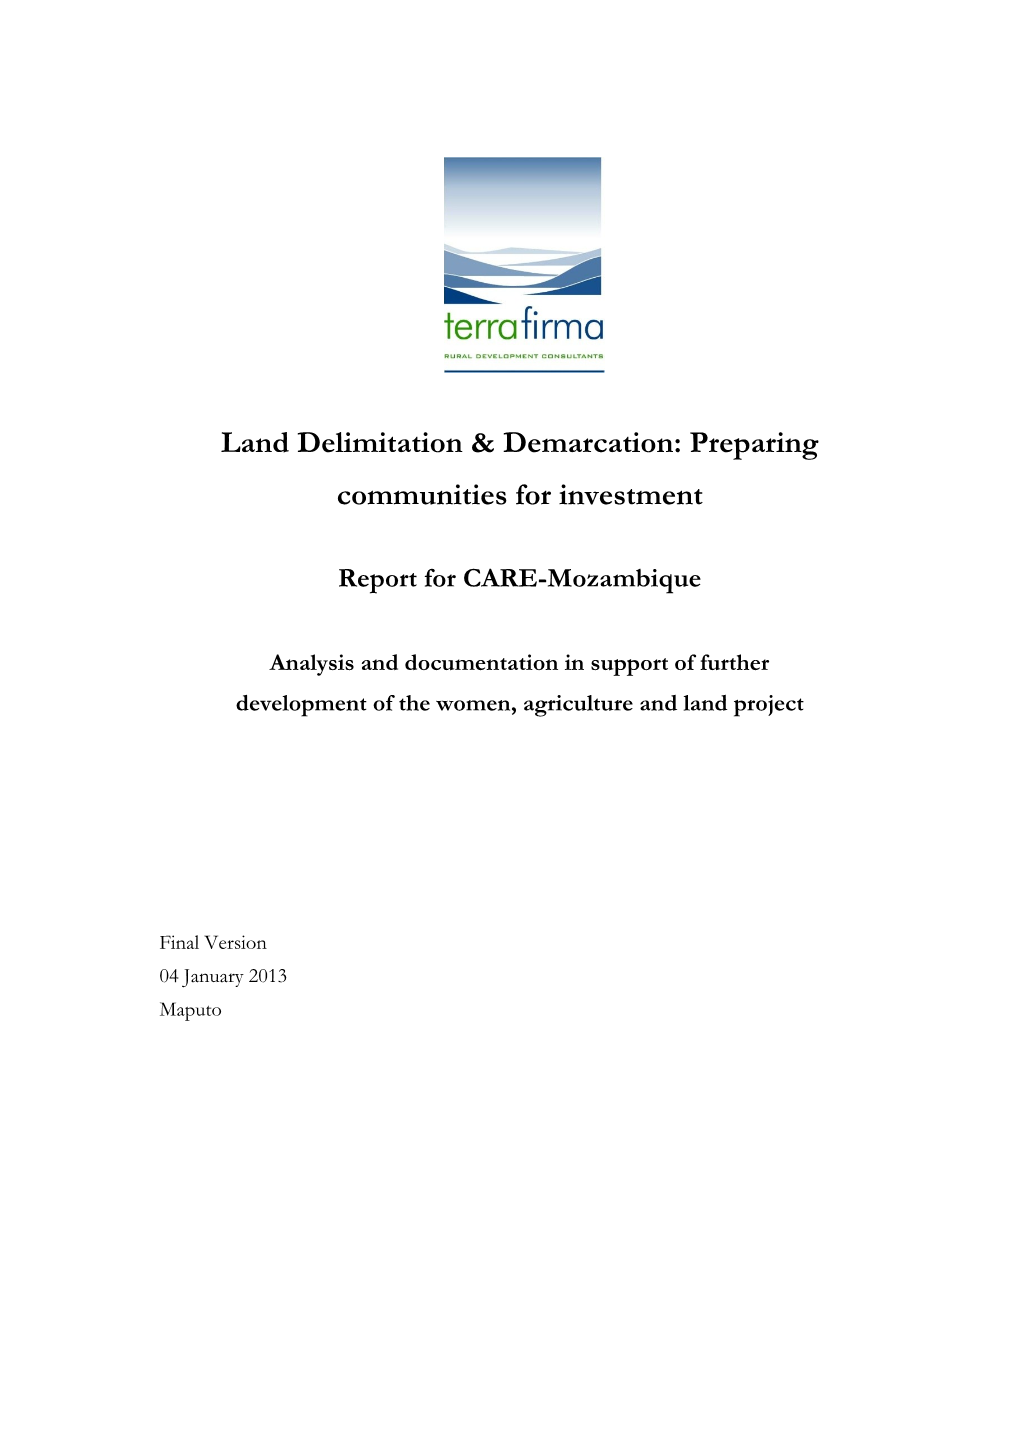 Land Delimitation & Demarcation: Preparing Communities for Investment